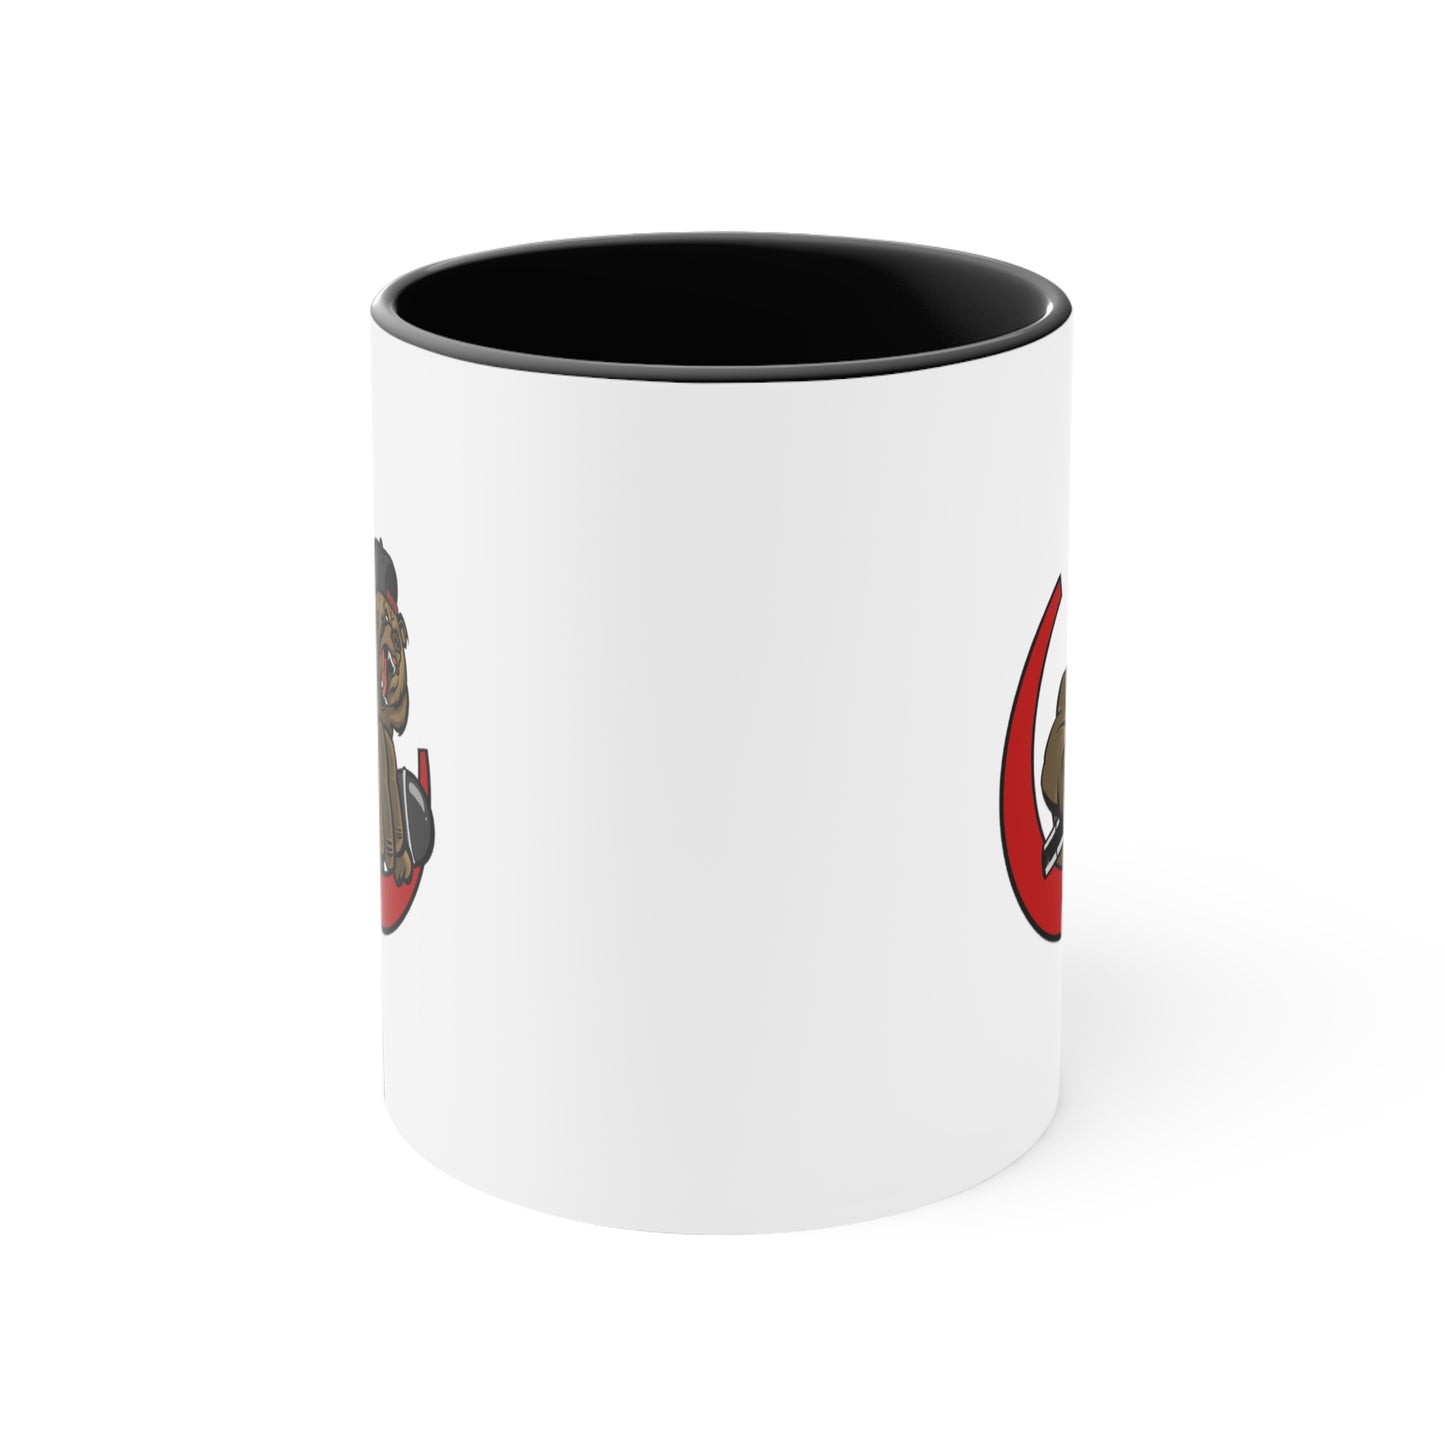 Lac Grizzly - Accent Coffee Mug, 11oz